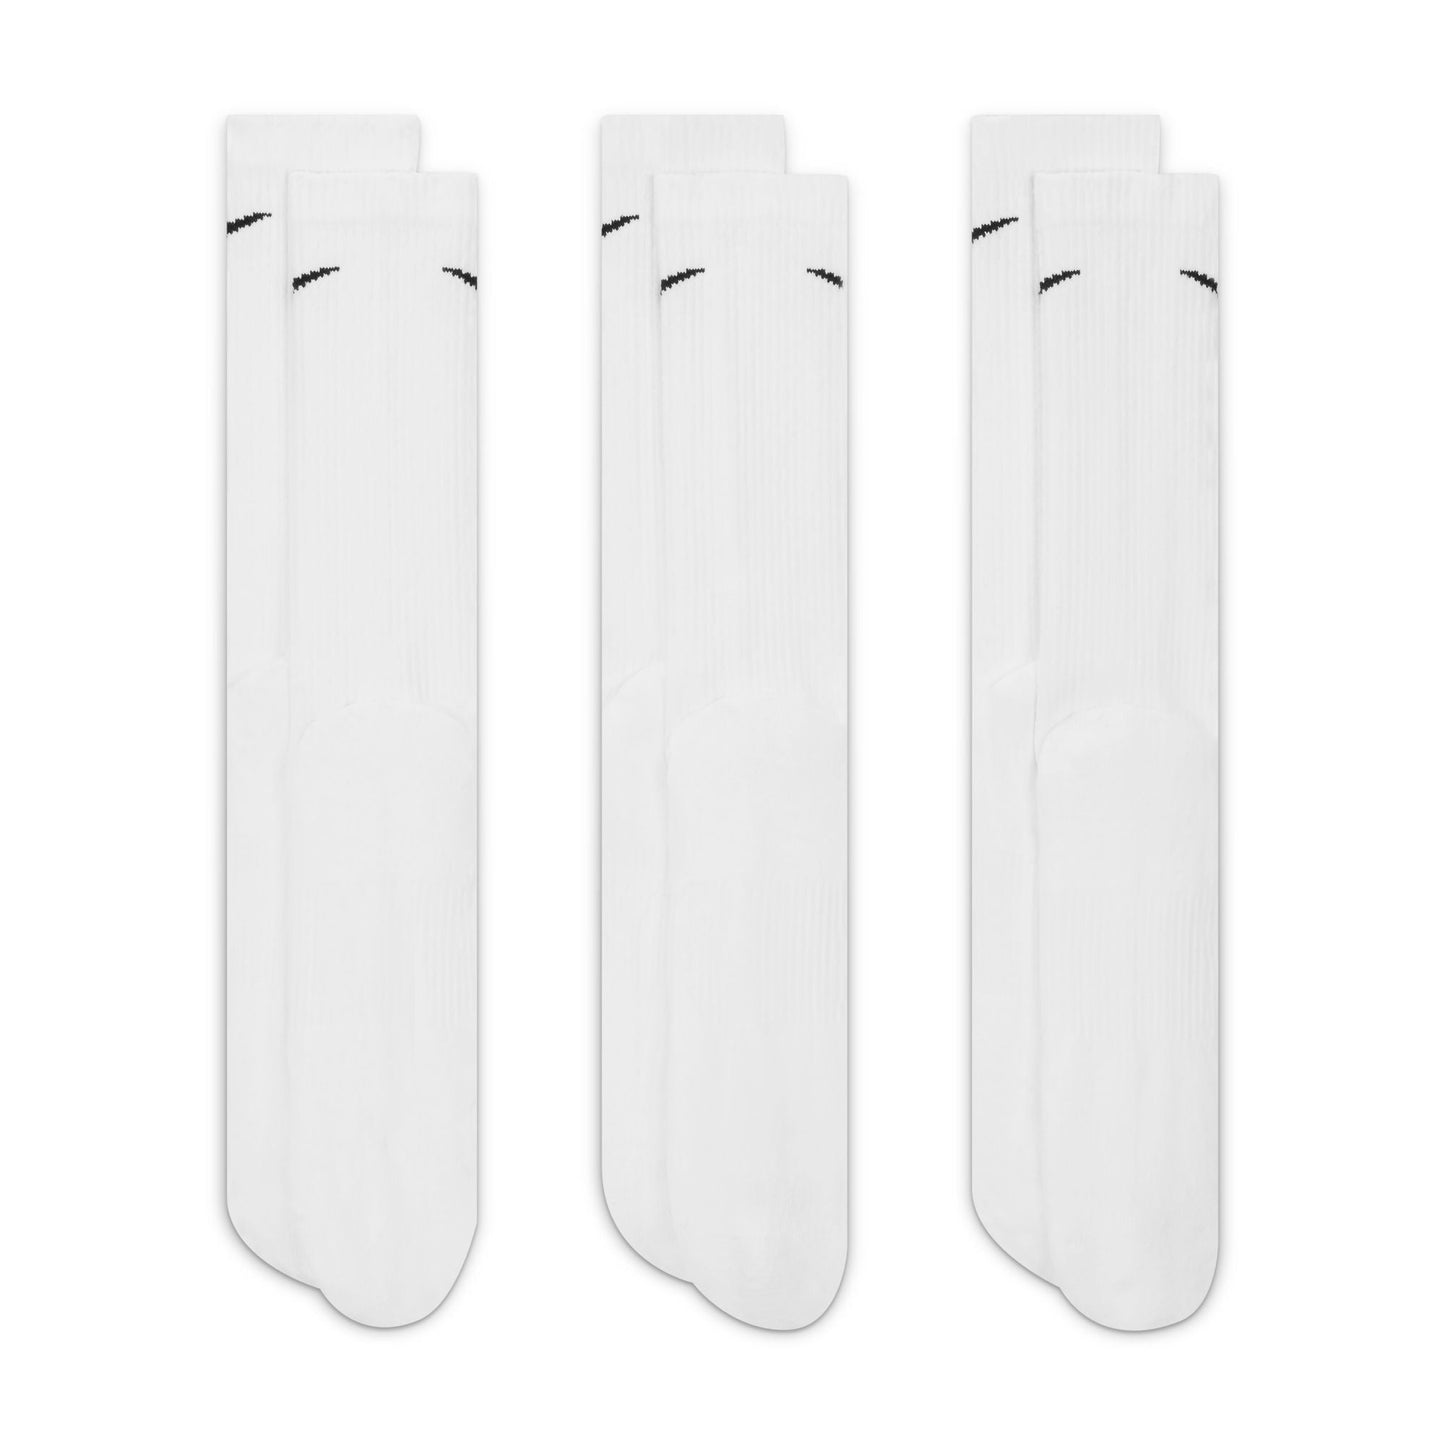 NIKE - גרביים לגברים Everyday Plus Cushioned בצבע לבן - MASHBIR//365